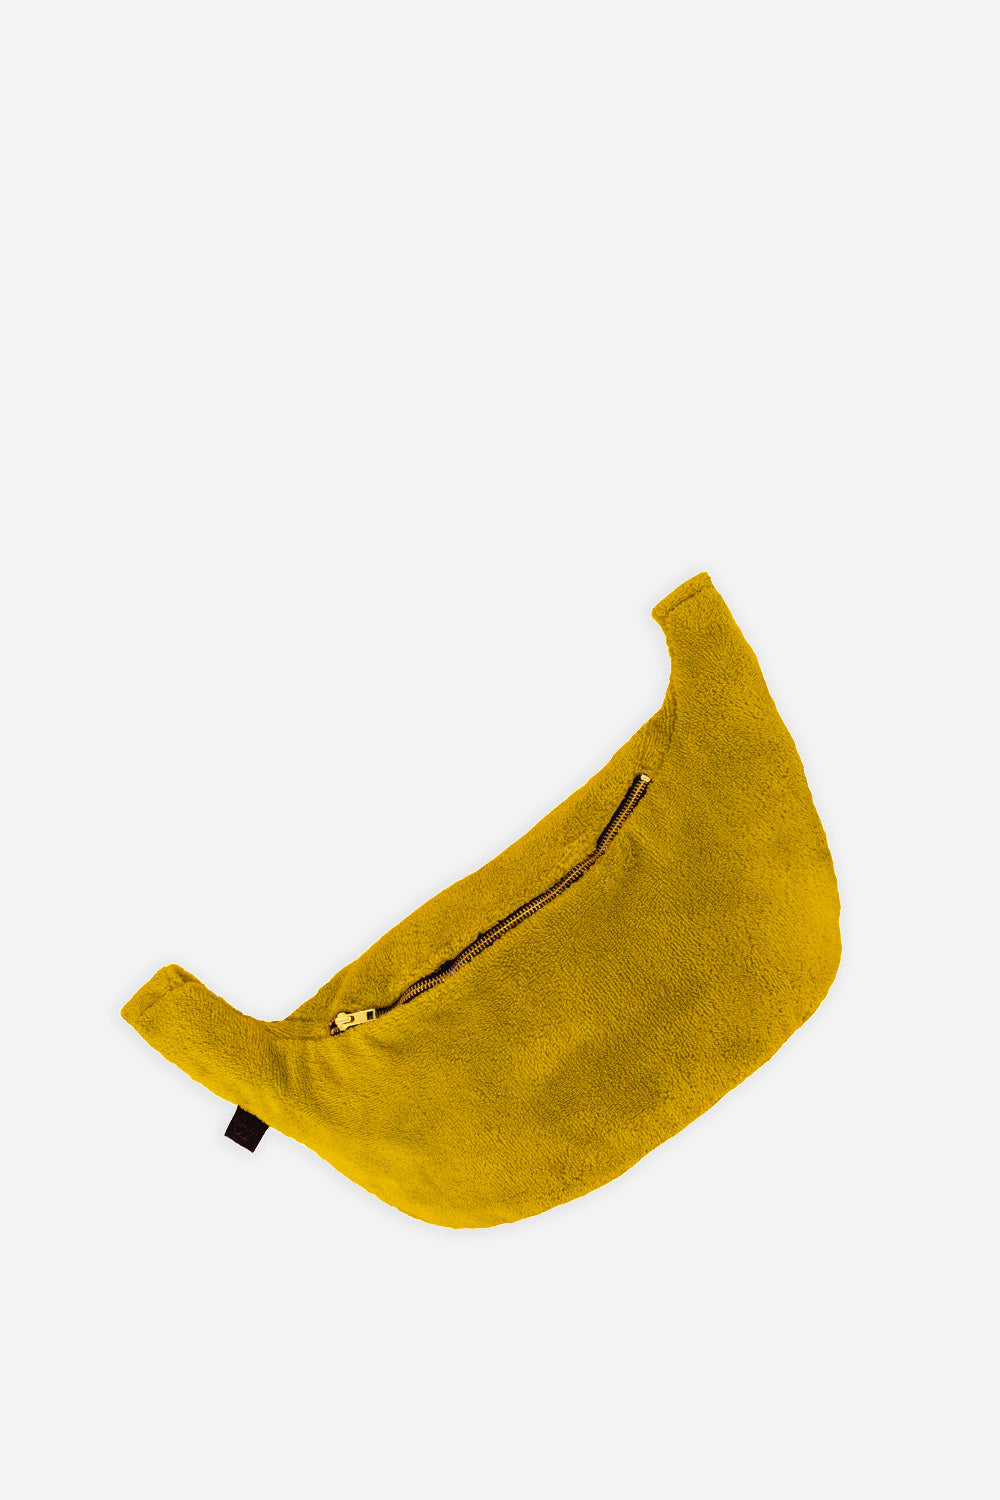 St Tropez Banana Bag / Safran